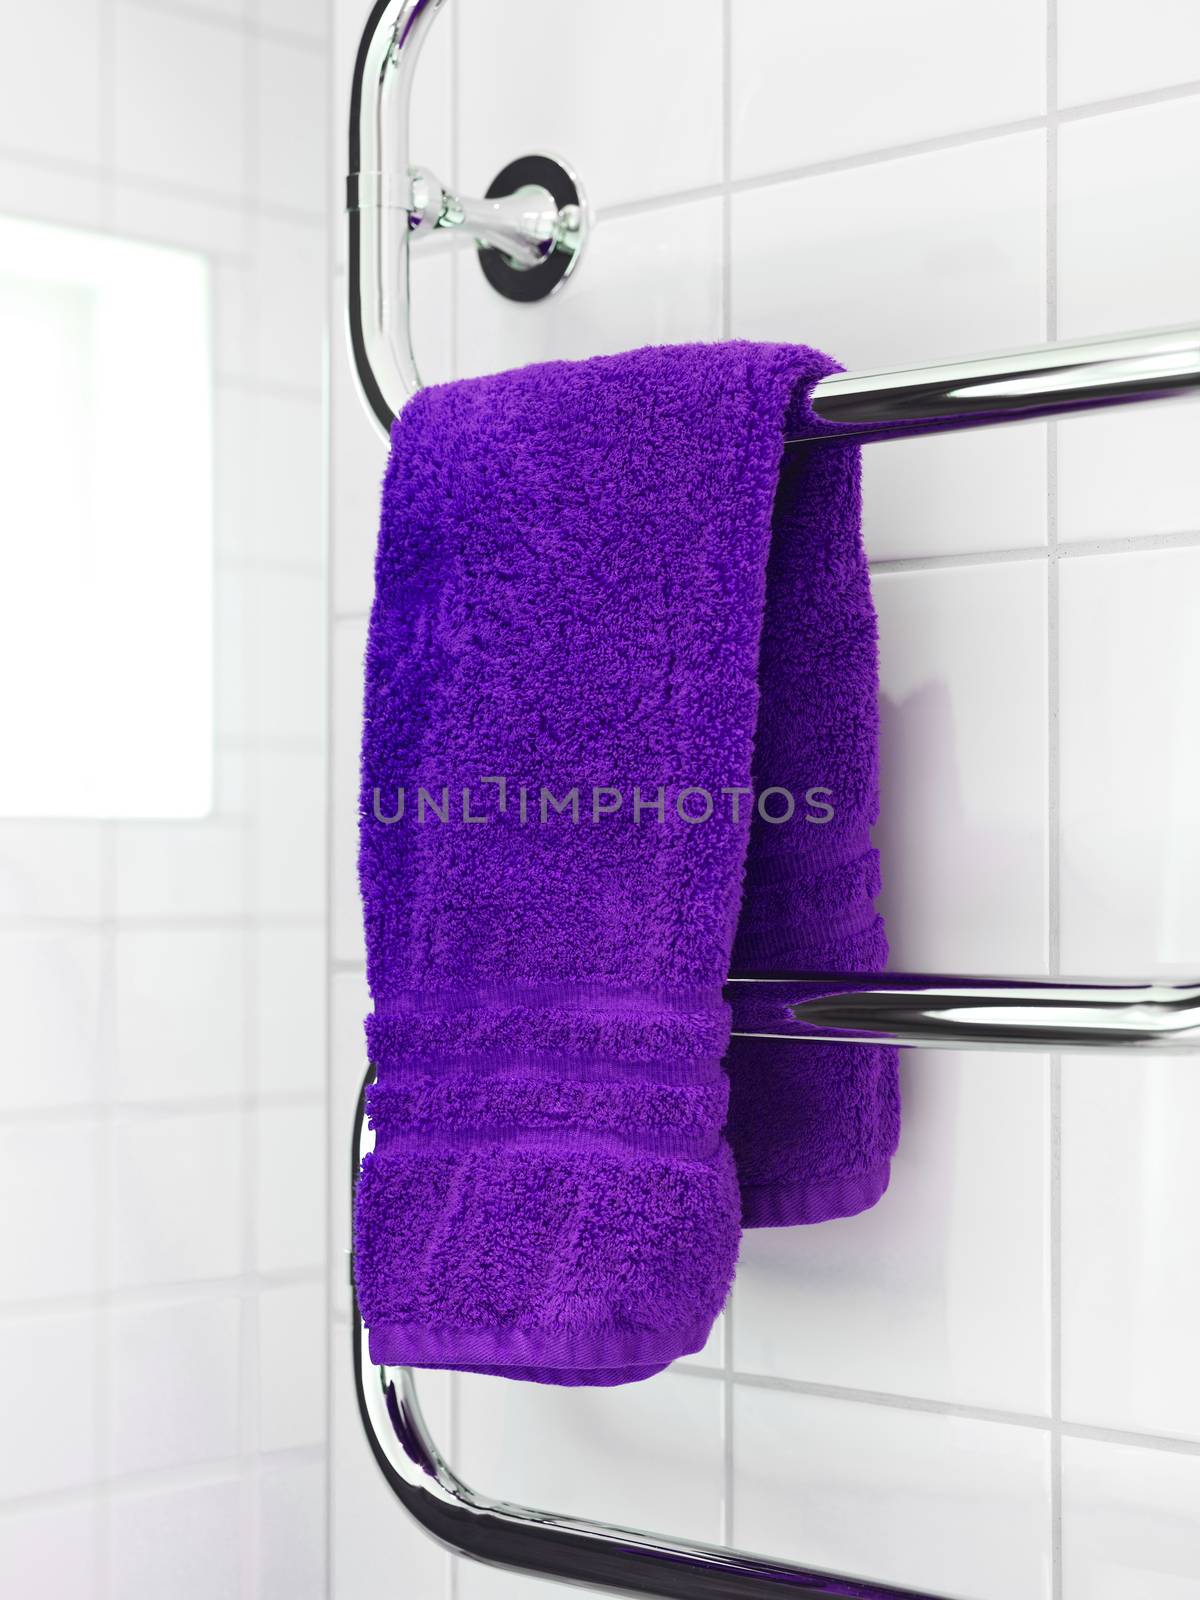 Purple Towel on a dryer in modern bathroom environment